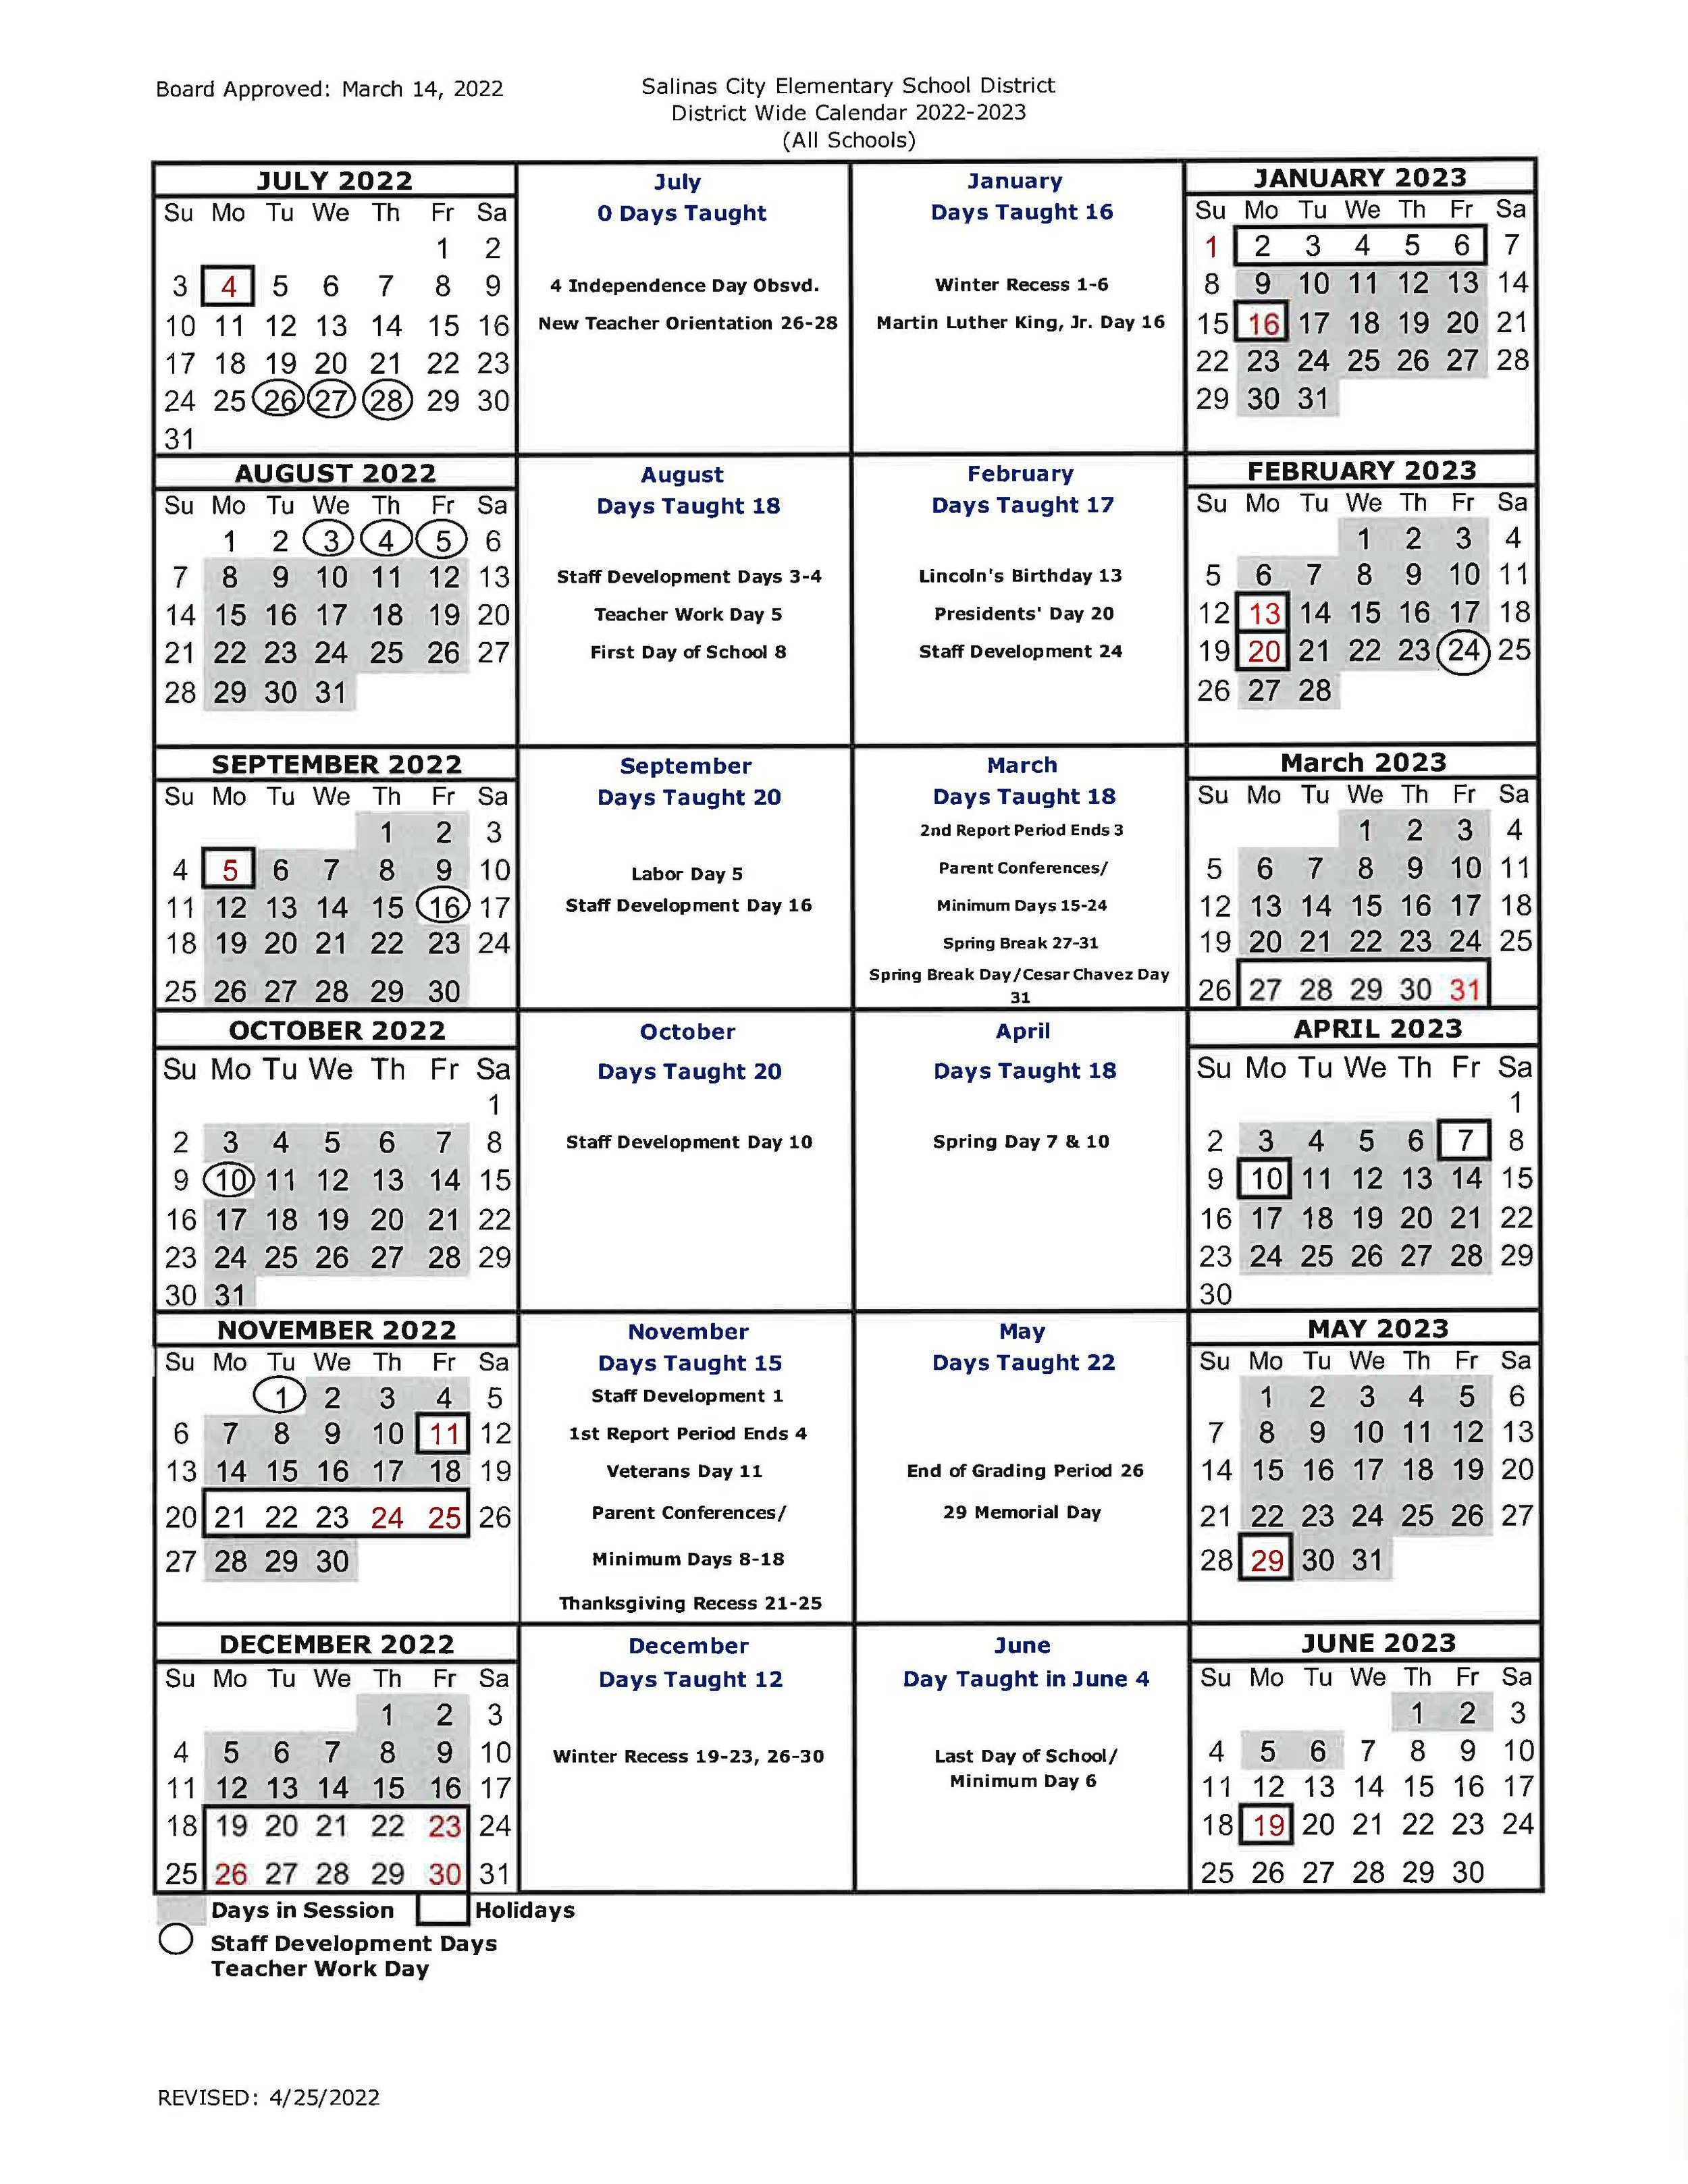 salinas-city-elementary-school-district-calendar-2023-publicholidays